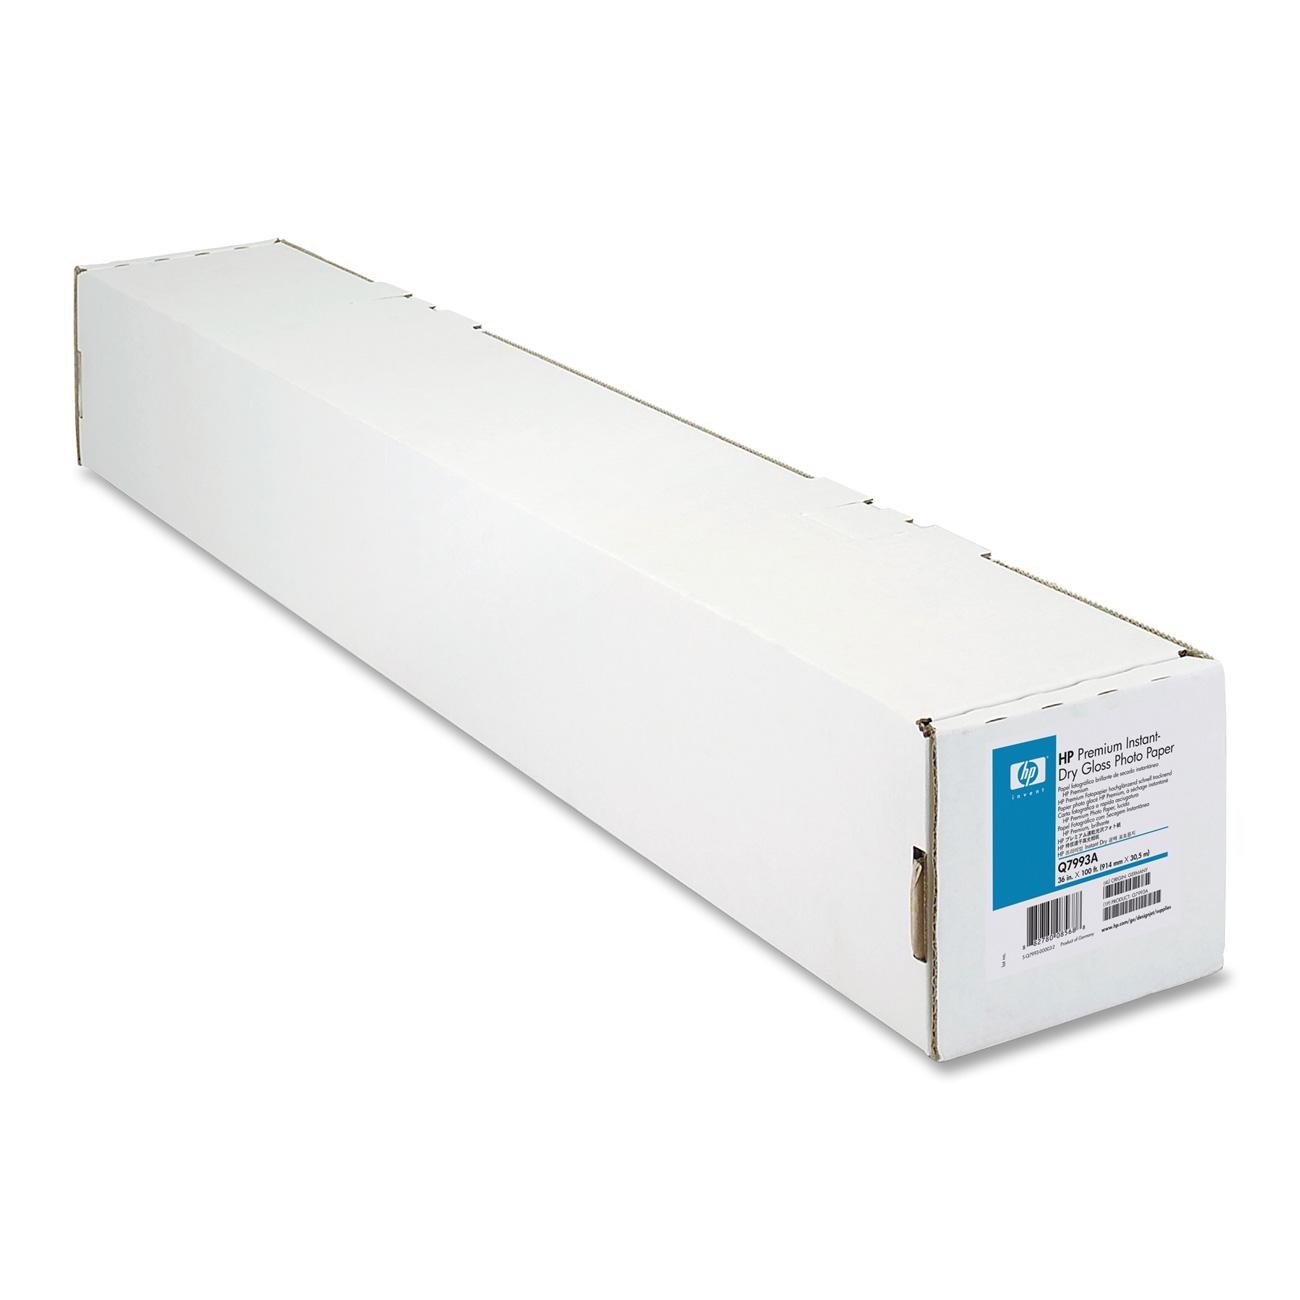 Hewlett Packard Q8675A Scrim Banner Paper for Indoor/Outdoor Signage, 24" x 50 ft, White